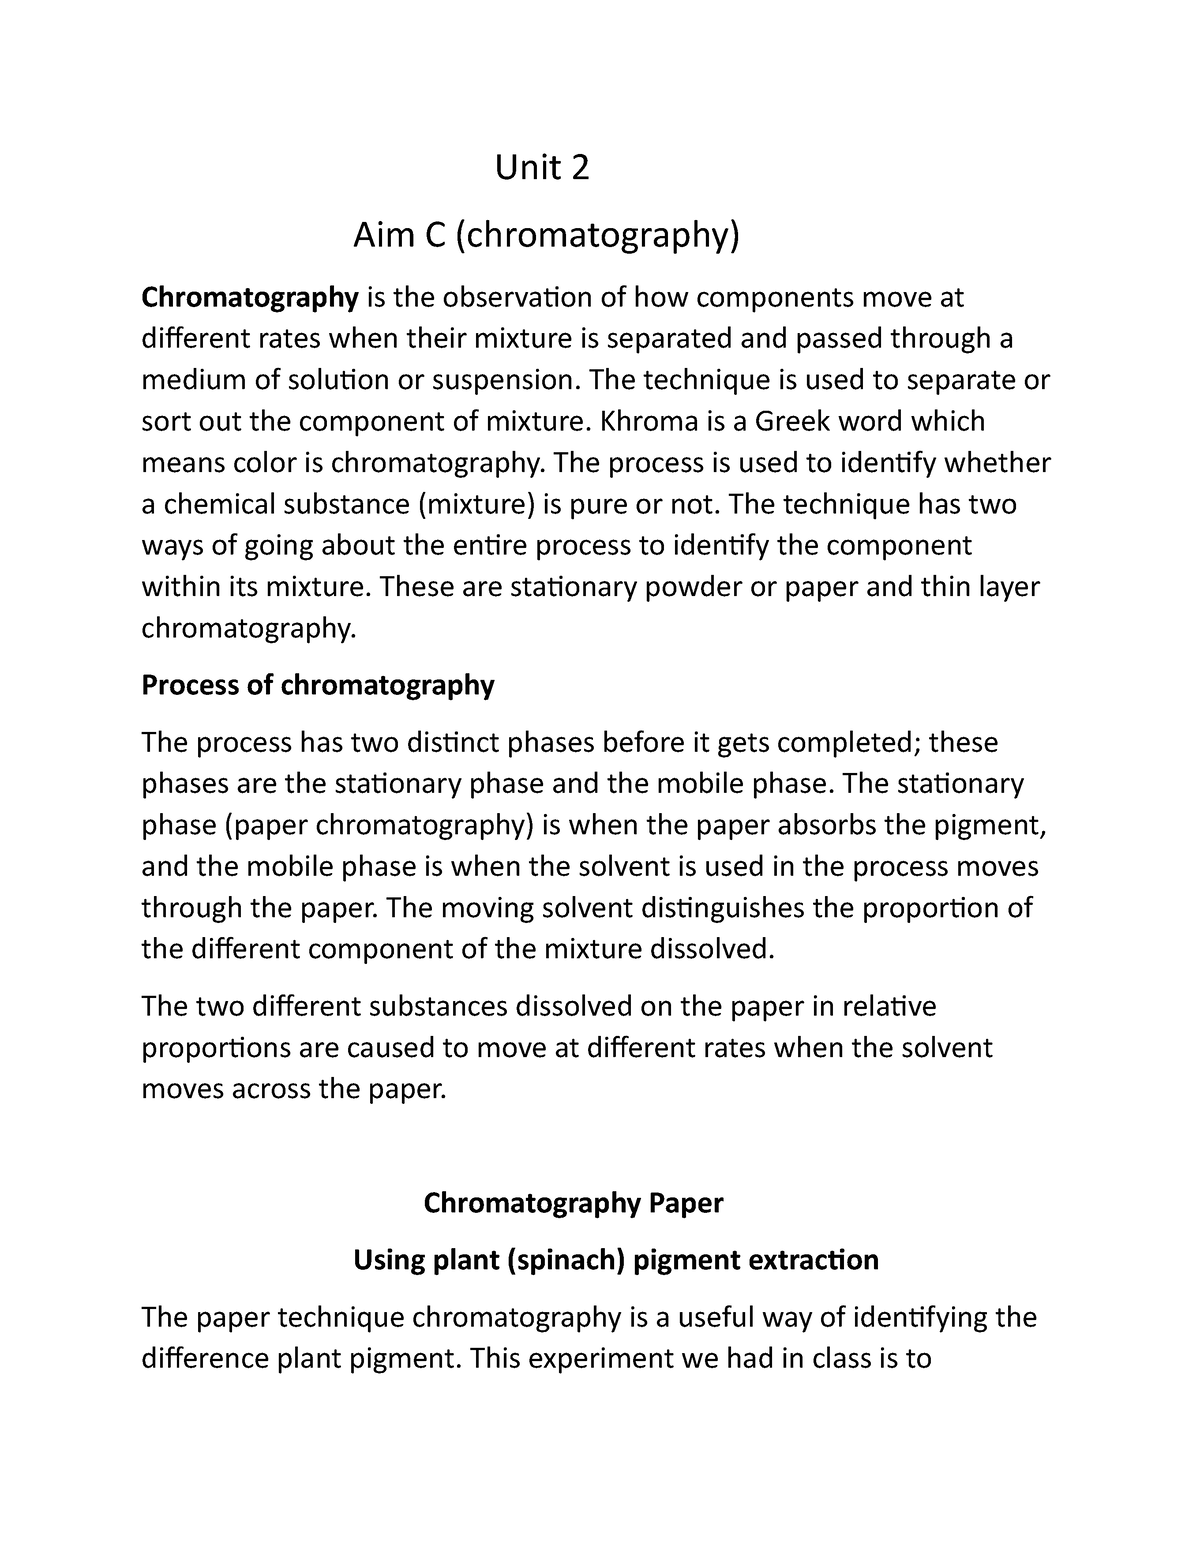 chromatography assignment unit 2